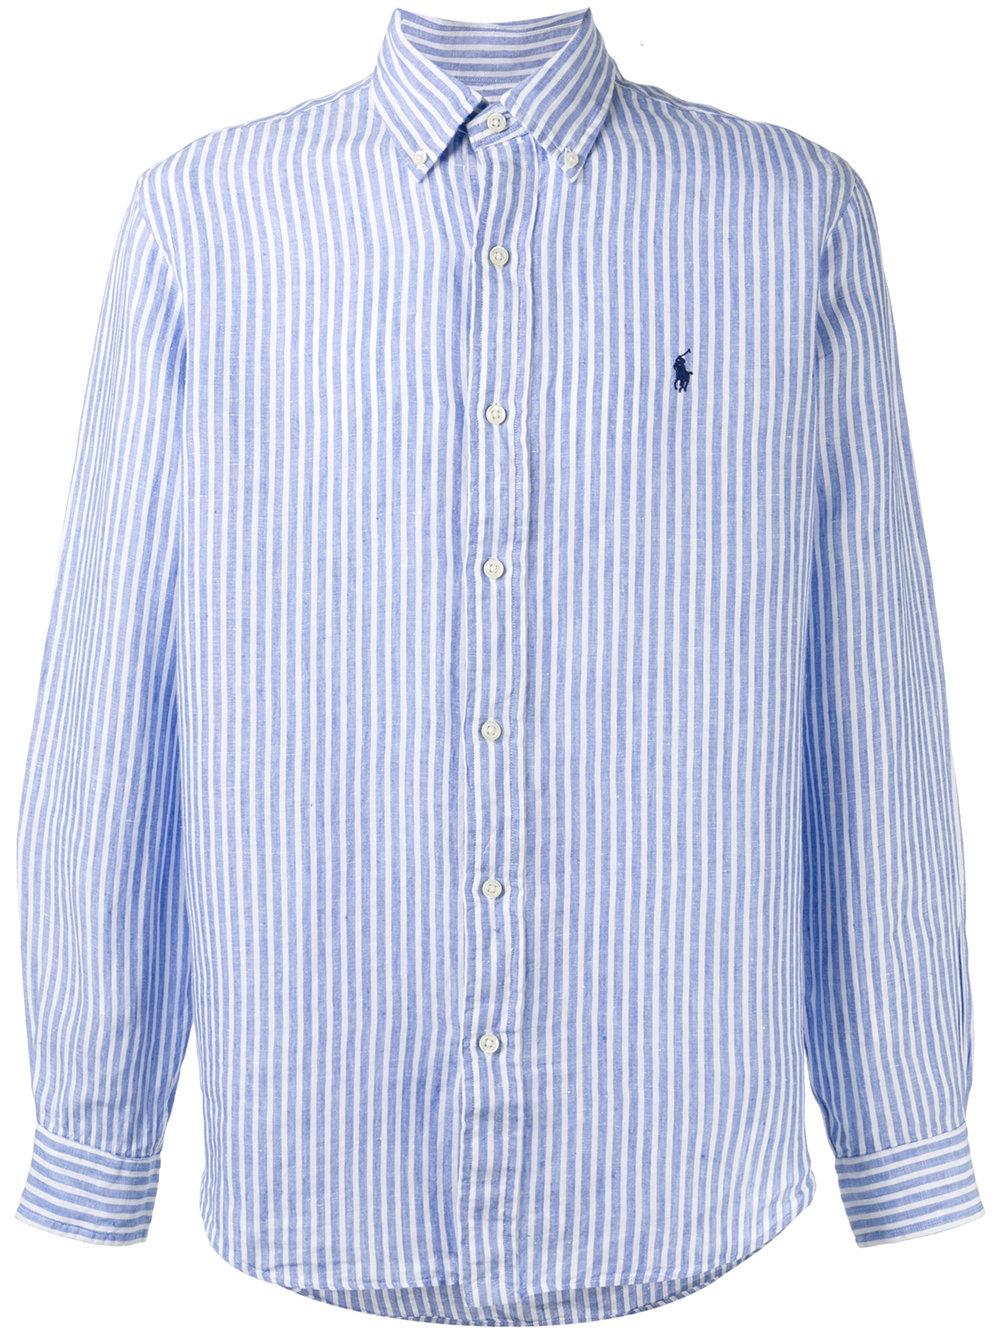 polo-ralph-lauren-striped-button-down-shirt-in-blue-for-men-lyst